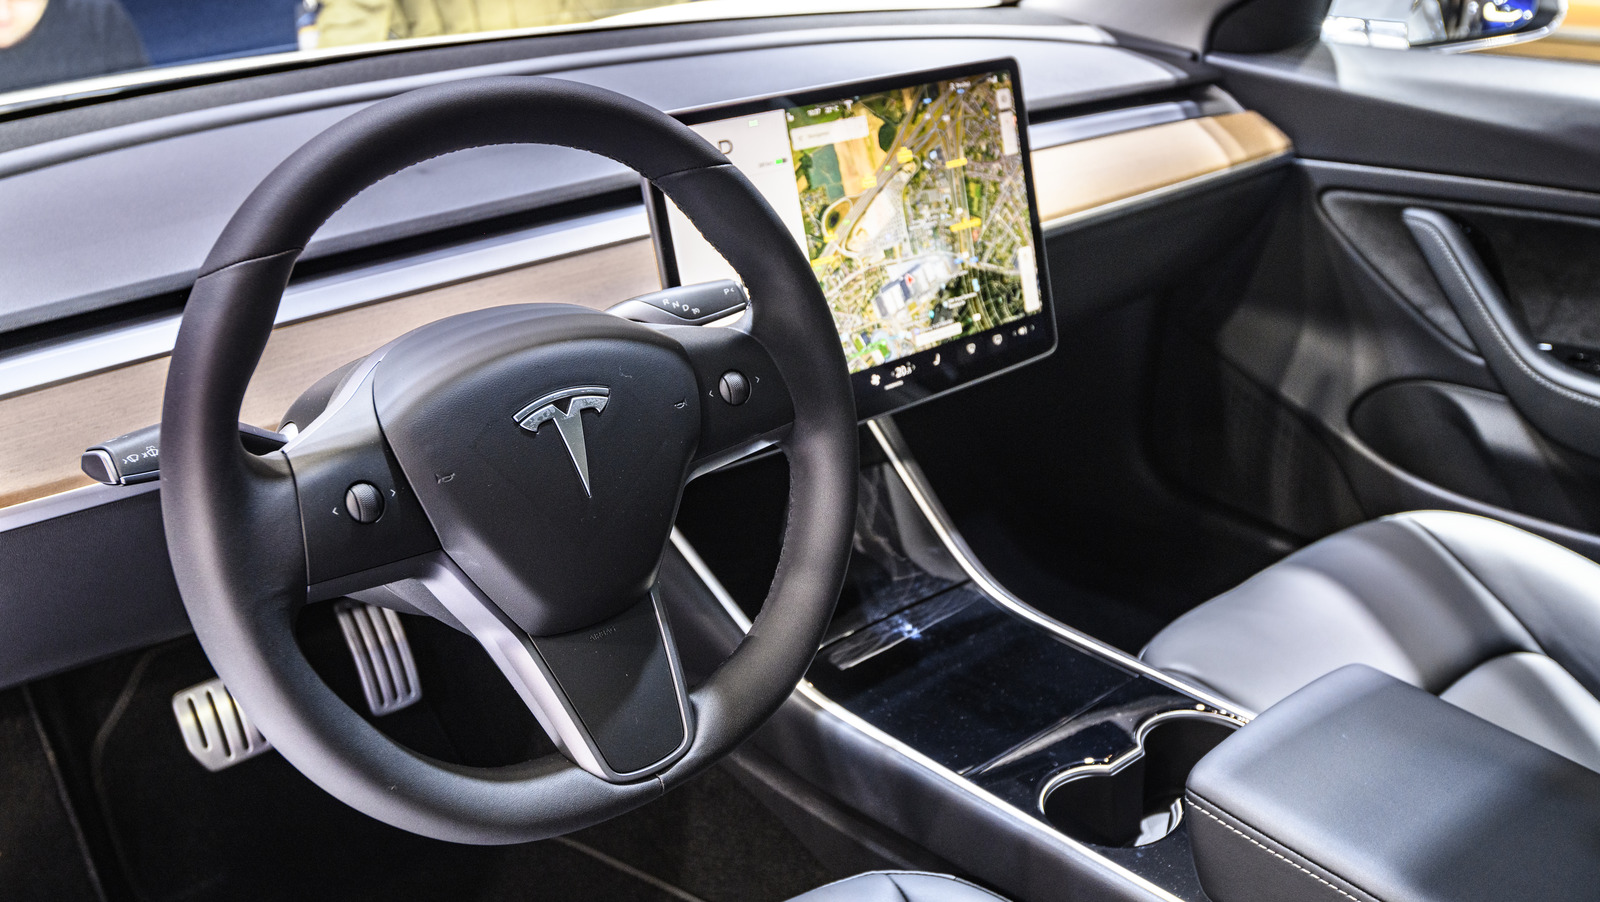 Tesla's hidden feature 'Elon Mode' discovered by hacker: report